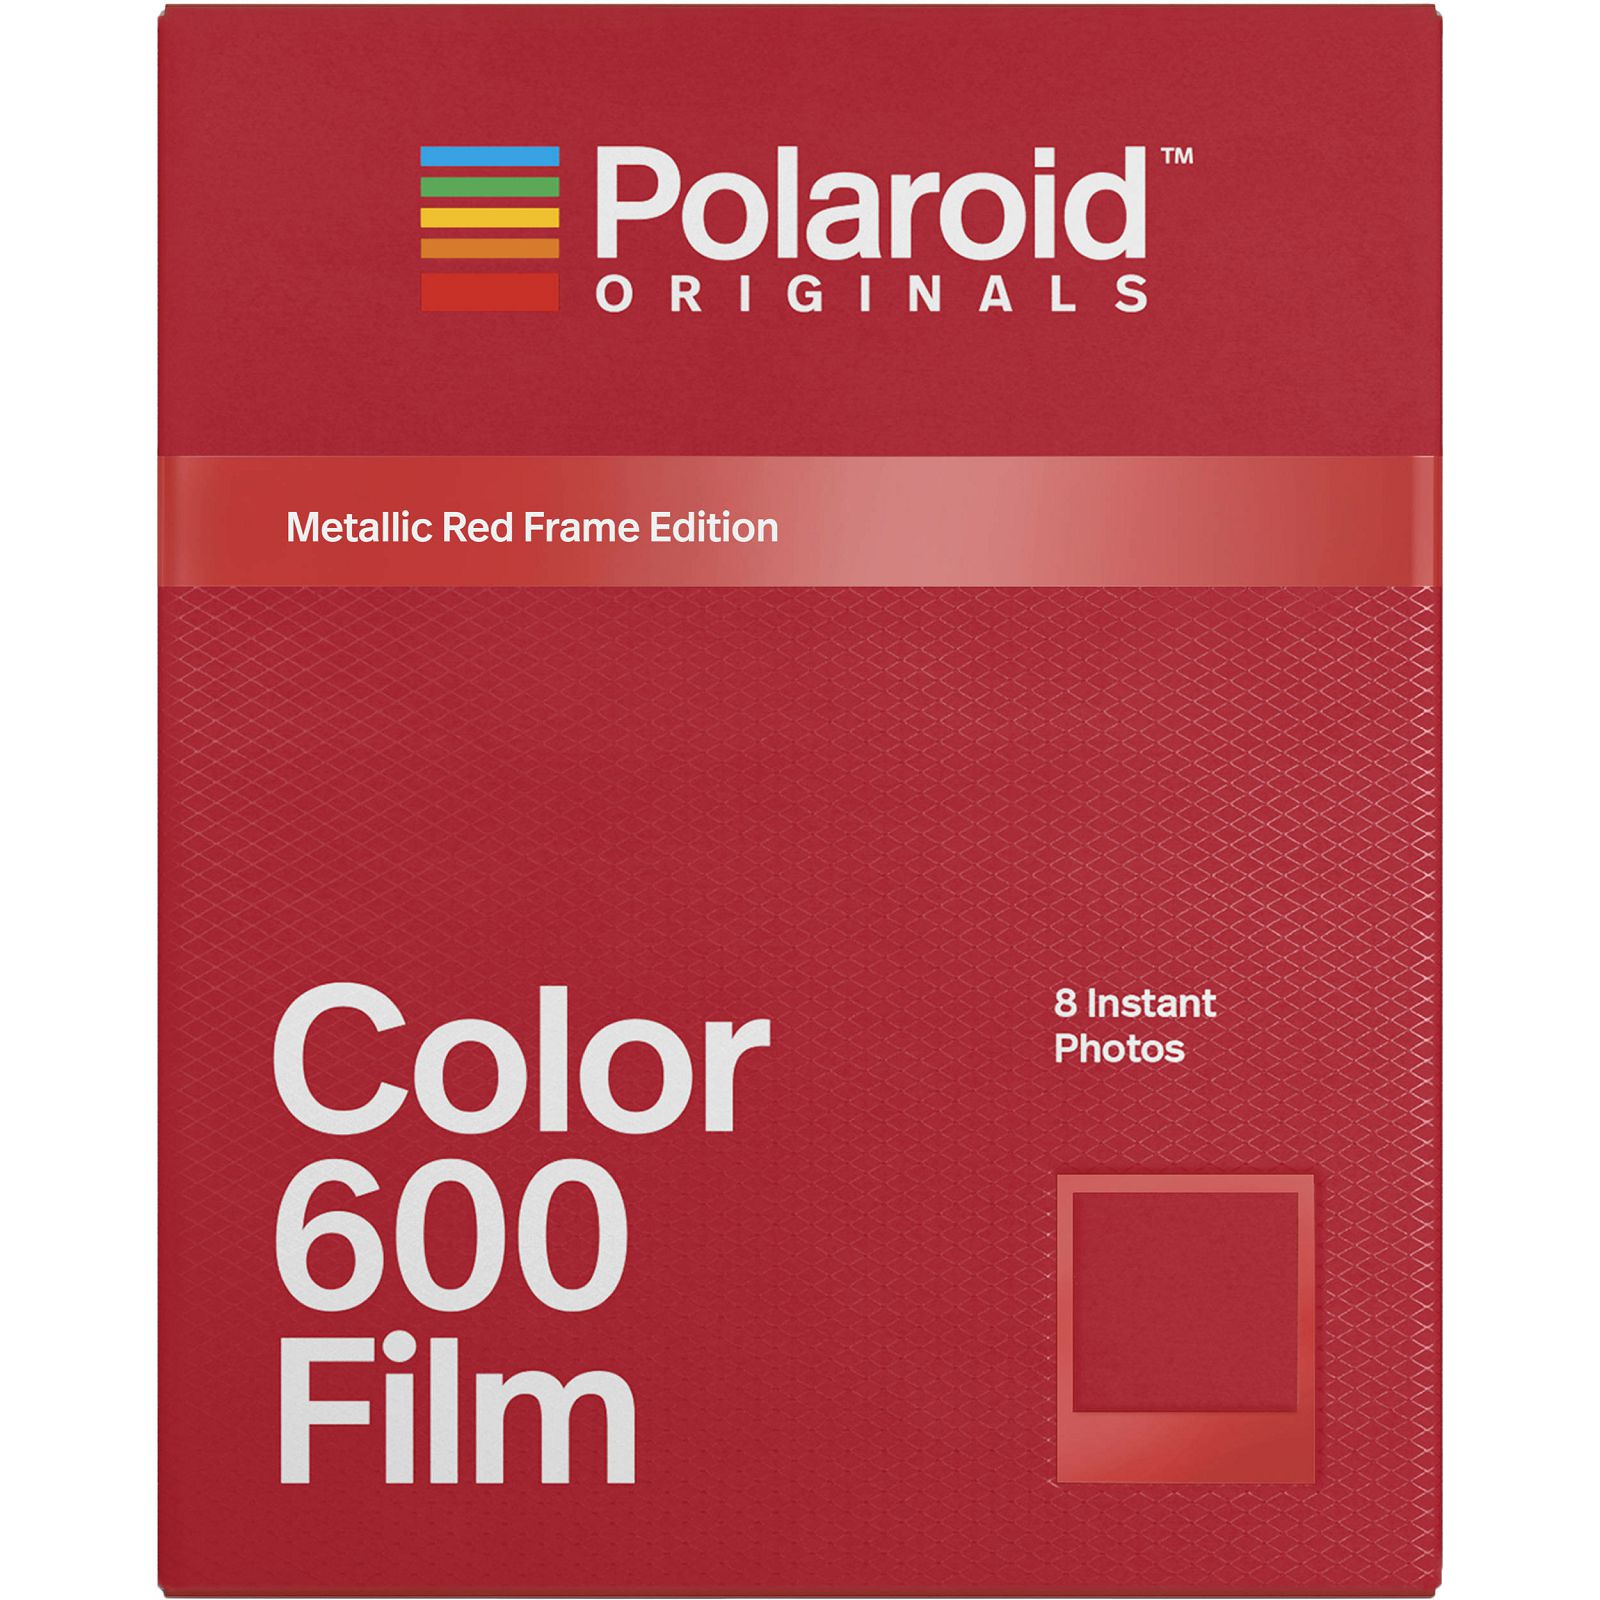 Polaroid Originals Color Film for 600 Metallic Red Frame Edition foto papir za fotografije u boji za Instant fotoaparate (004858)